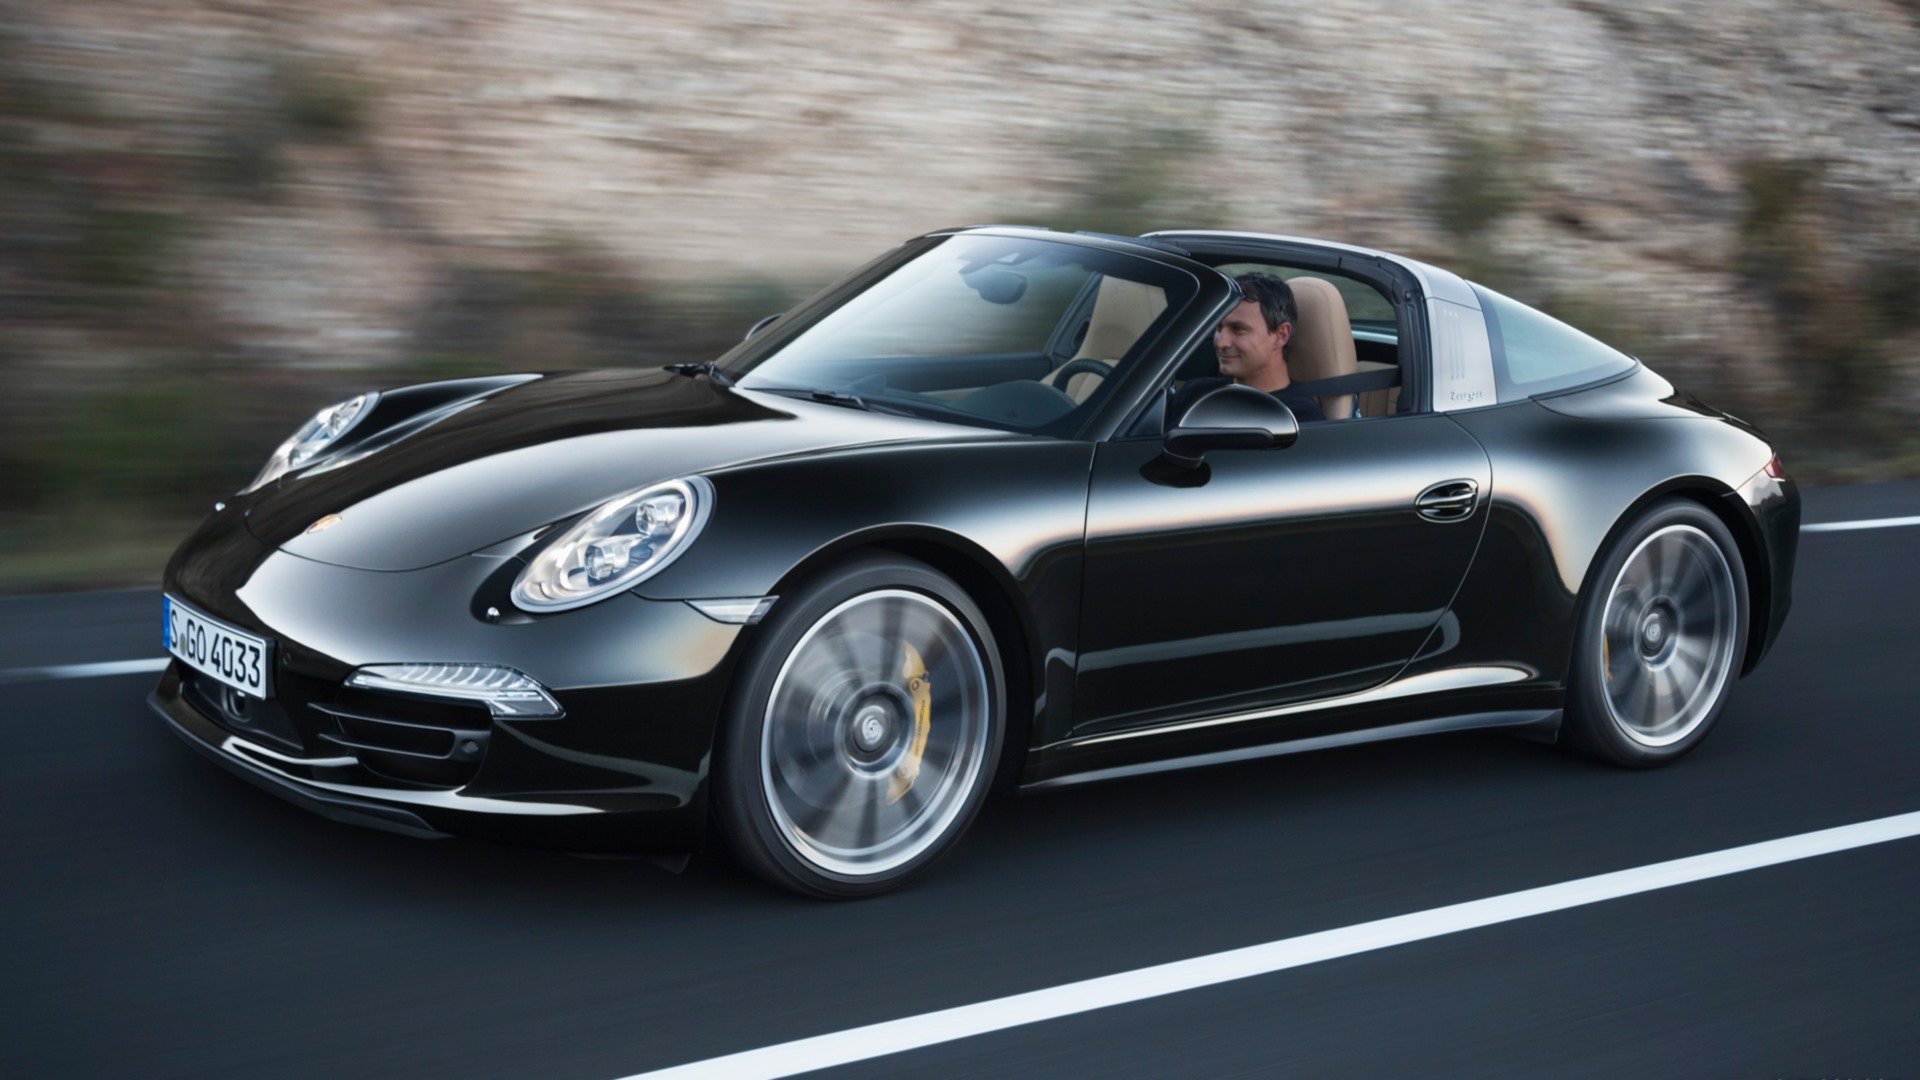 High resolution Porsche 911 Targa full hd 1920x1080 background ID:383511 for PC